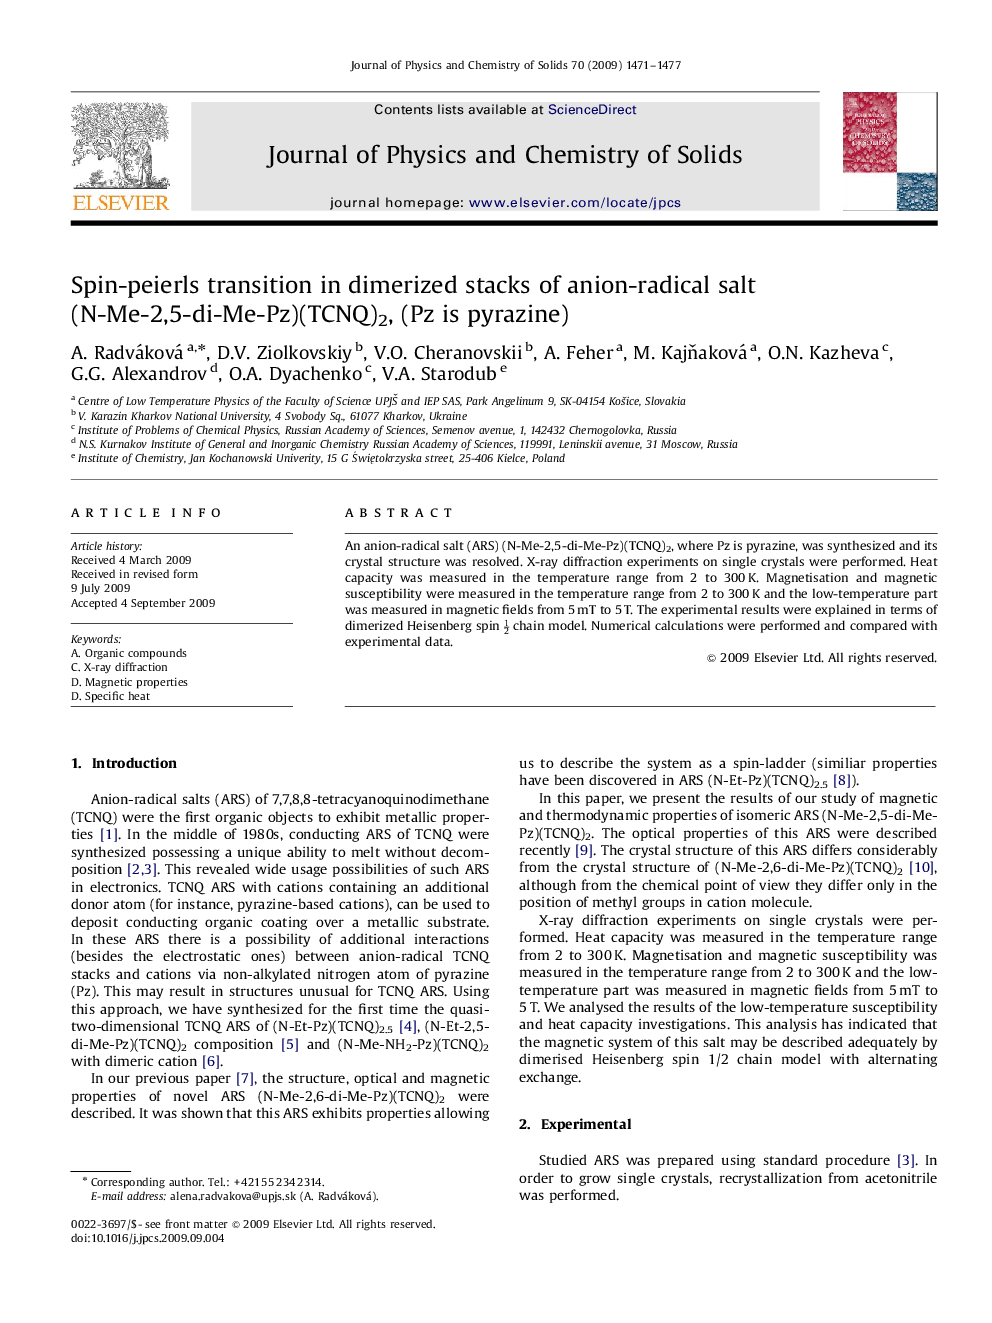 Spin-peierls transition in dimerized stacks of anion-radical salt (N-Me-2,5-di-Me-Pz)(TCNQ)2, (Pz is pyrazine)